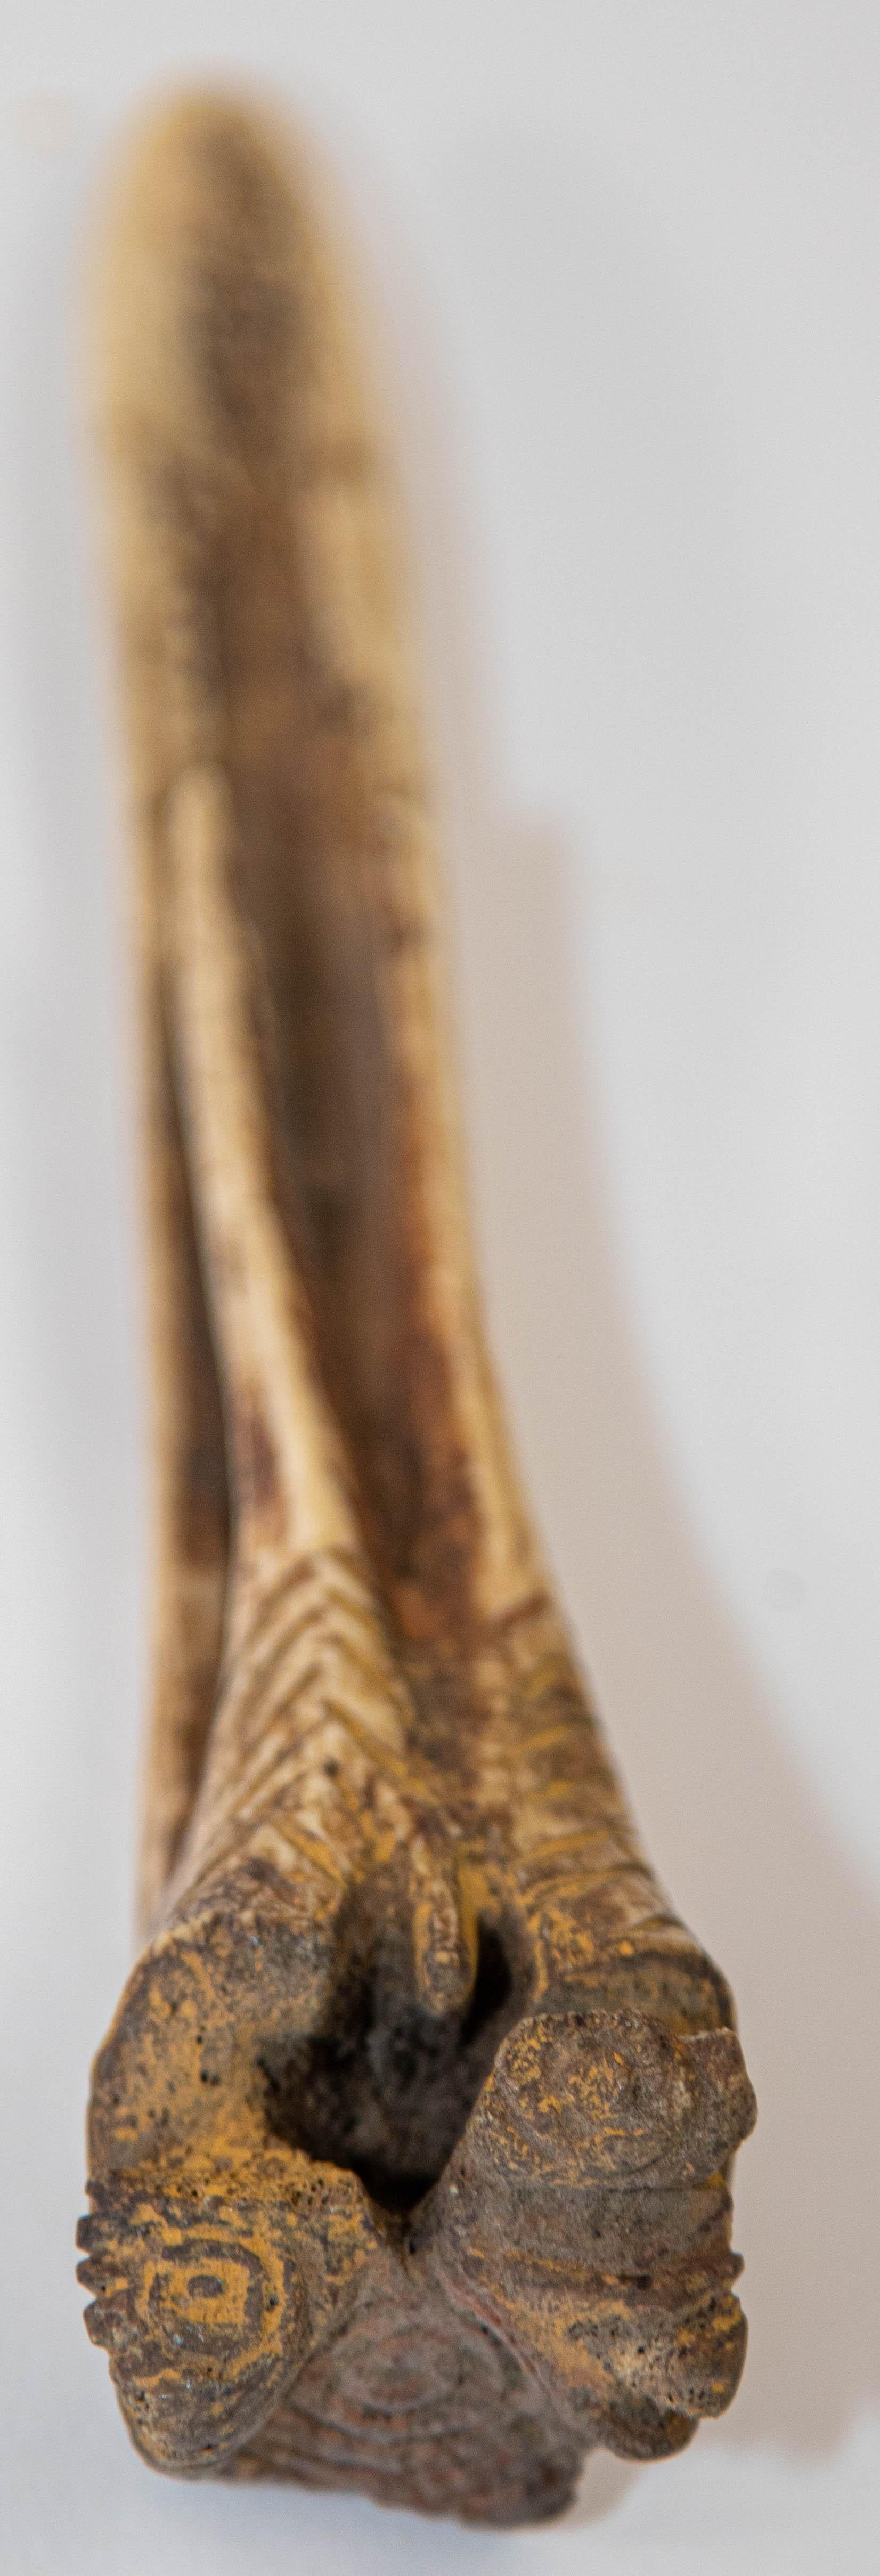 Antique Ethnic Artifact Sepik River Cassowary Bone from Papua New Guinea For Sale 6